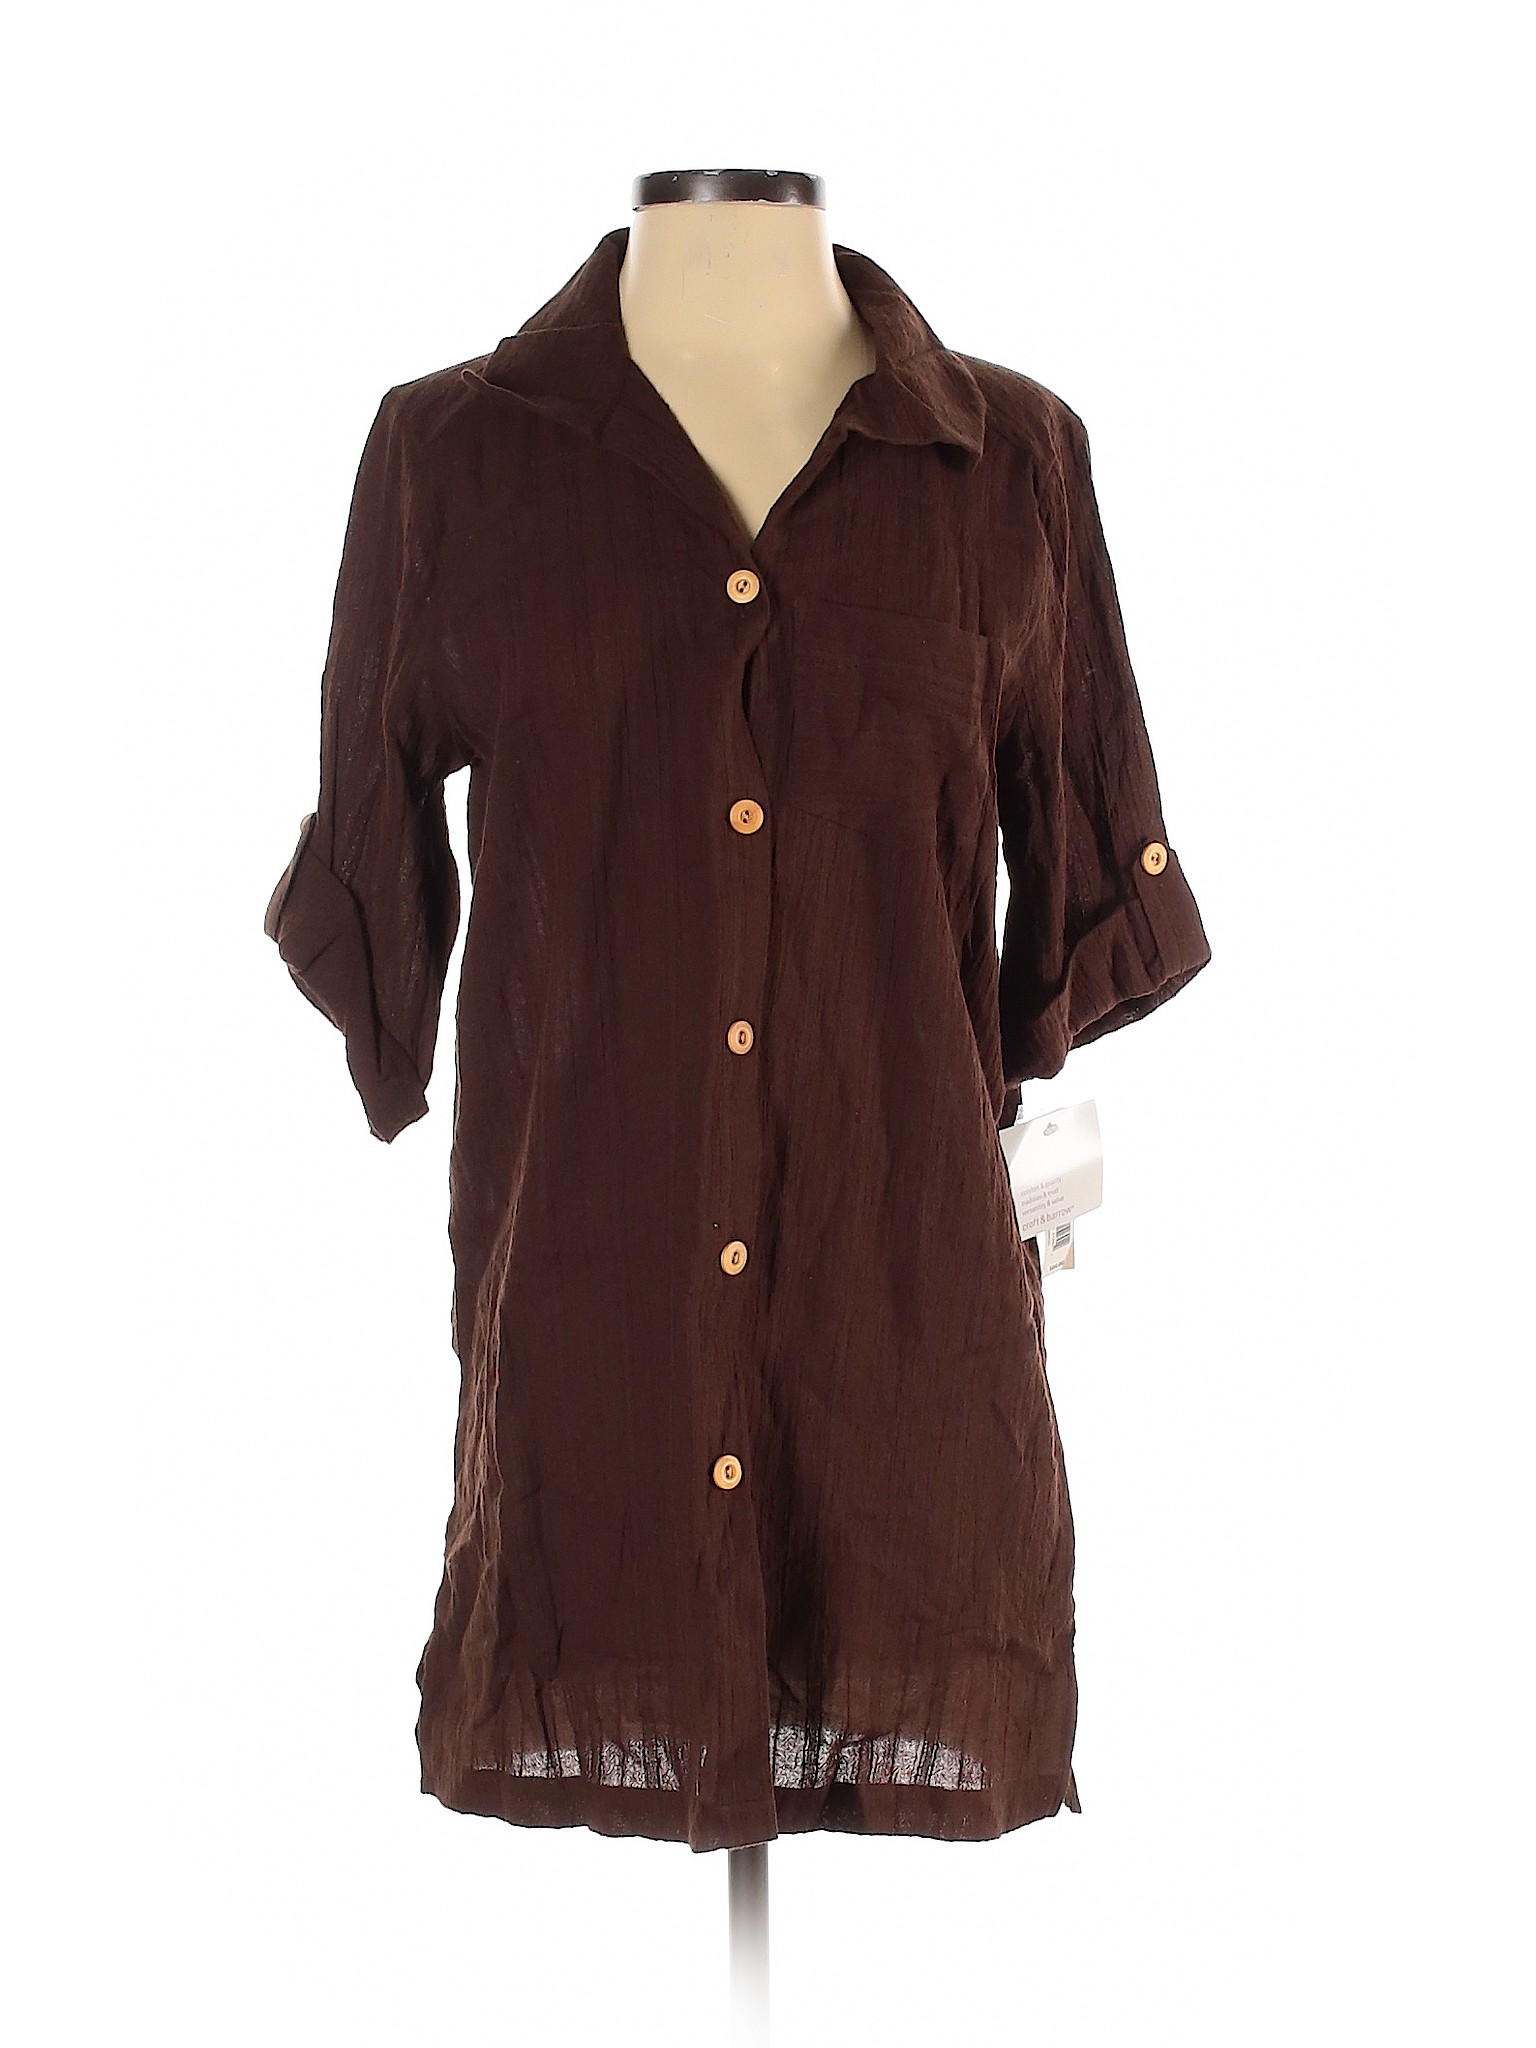 NWT Croft & Barrow Women Brown 3/4 Sleeve Button-Down Shirt S | eBay